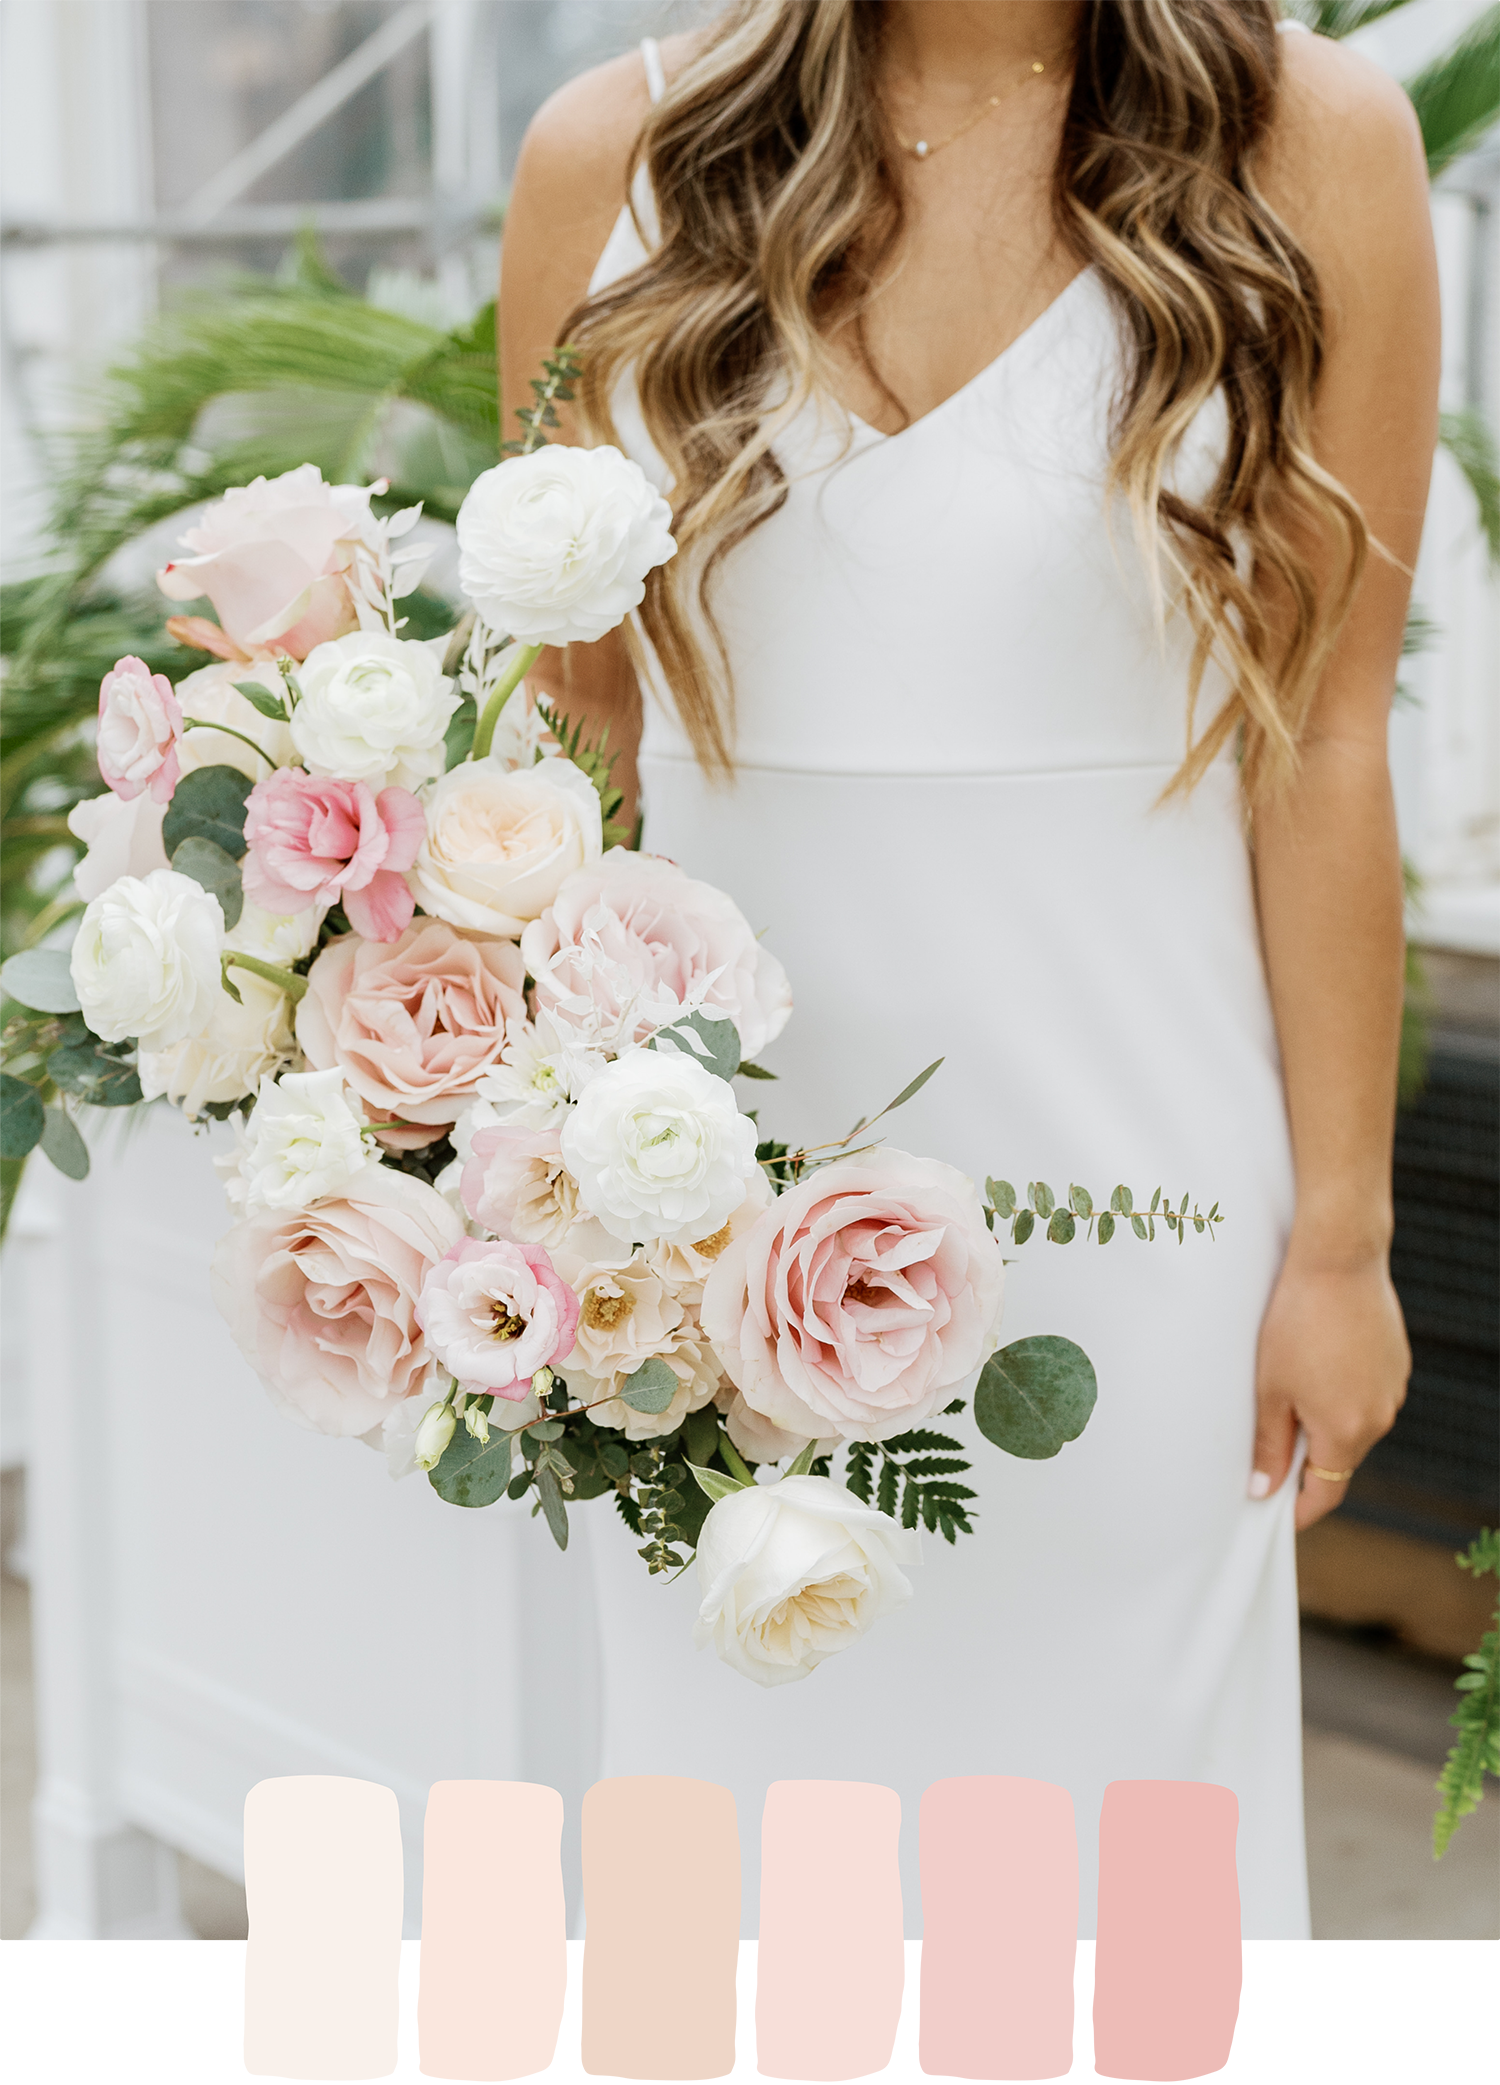 DFW Bulk, Wedding & DIY Flowers.